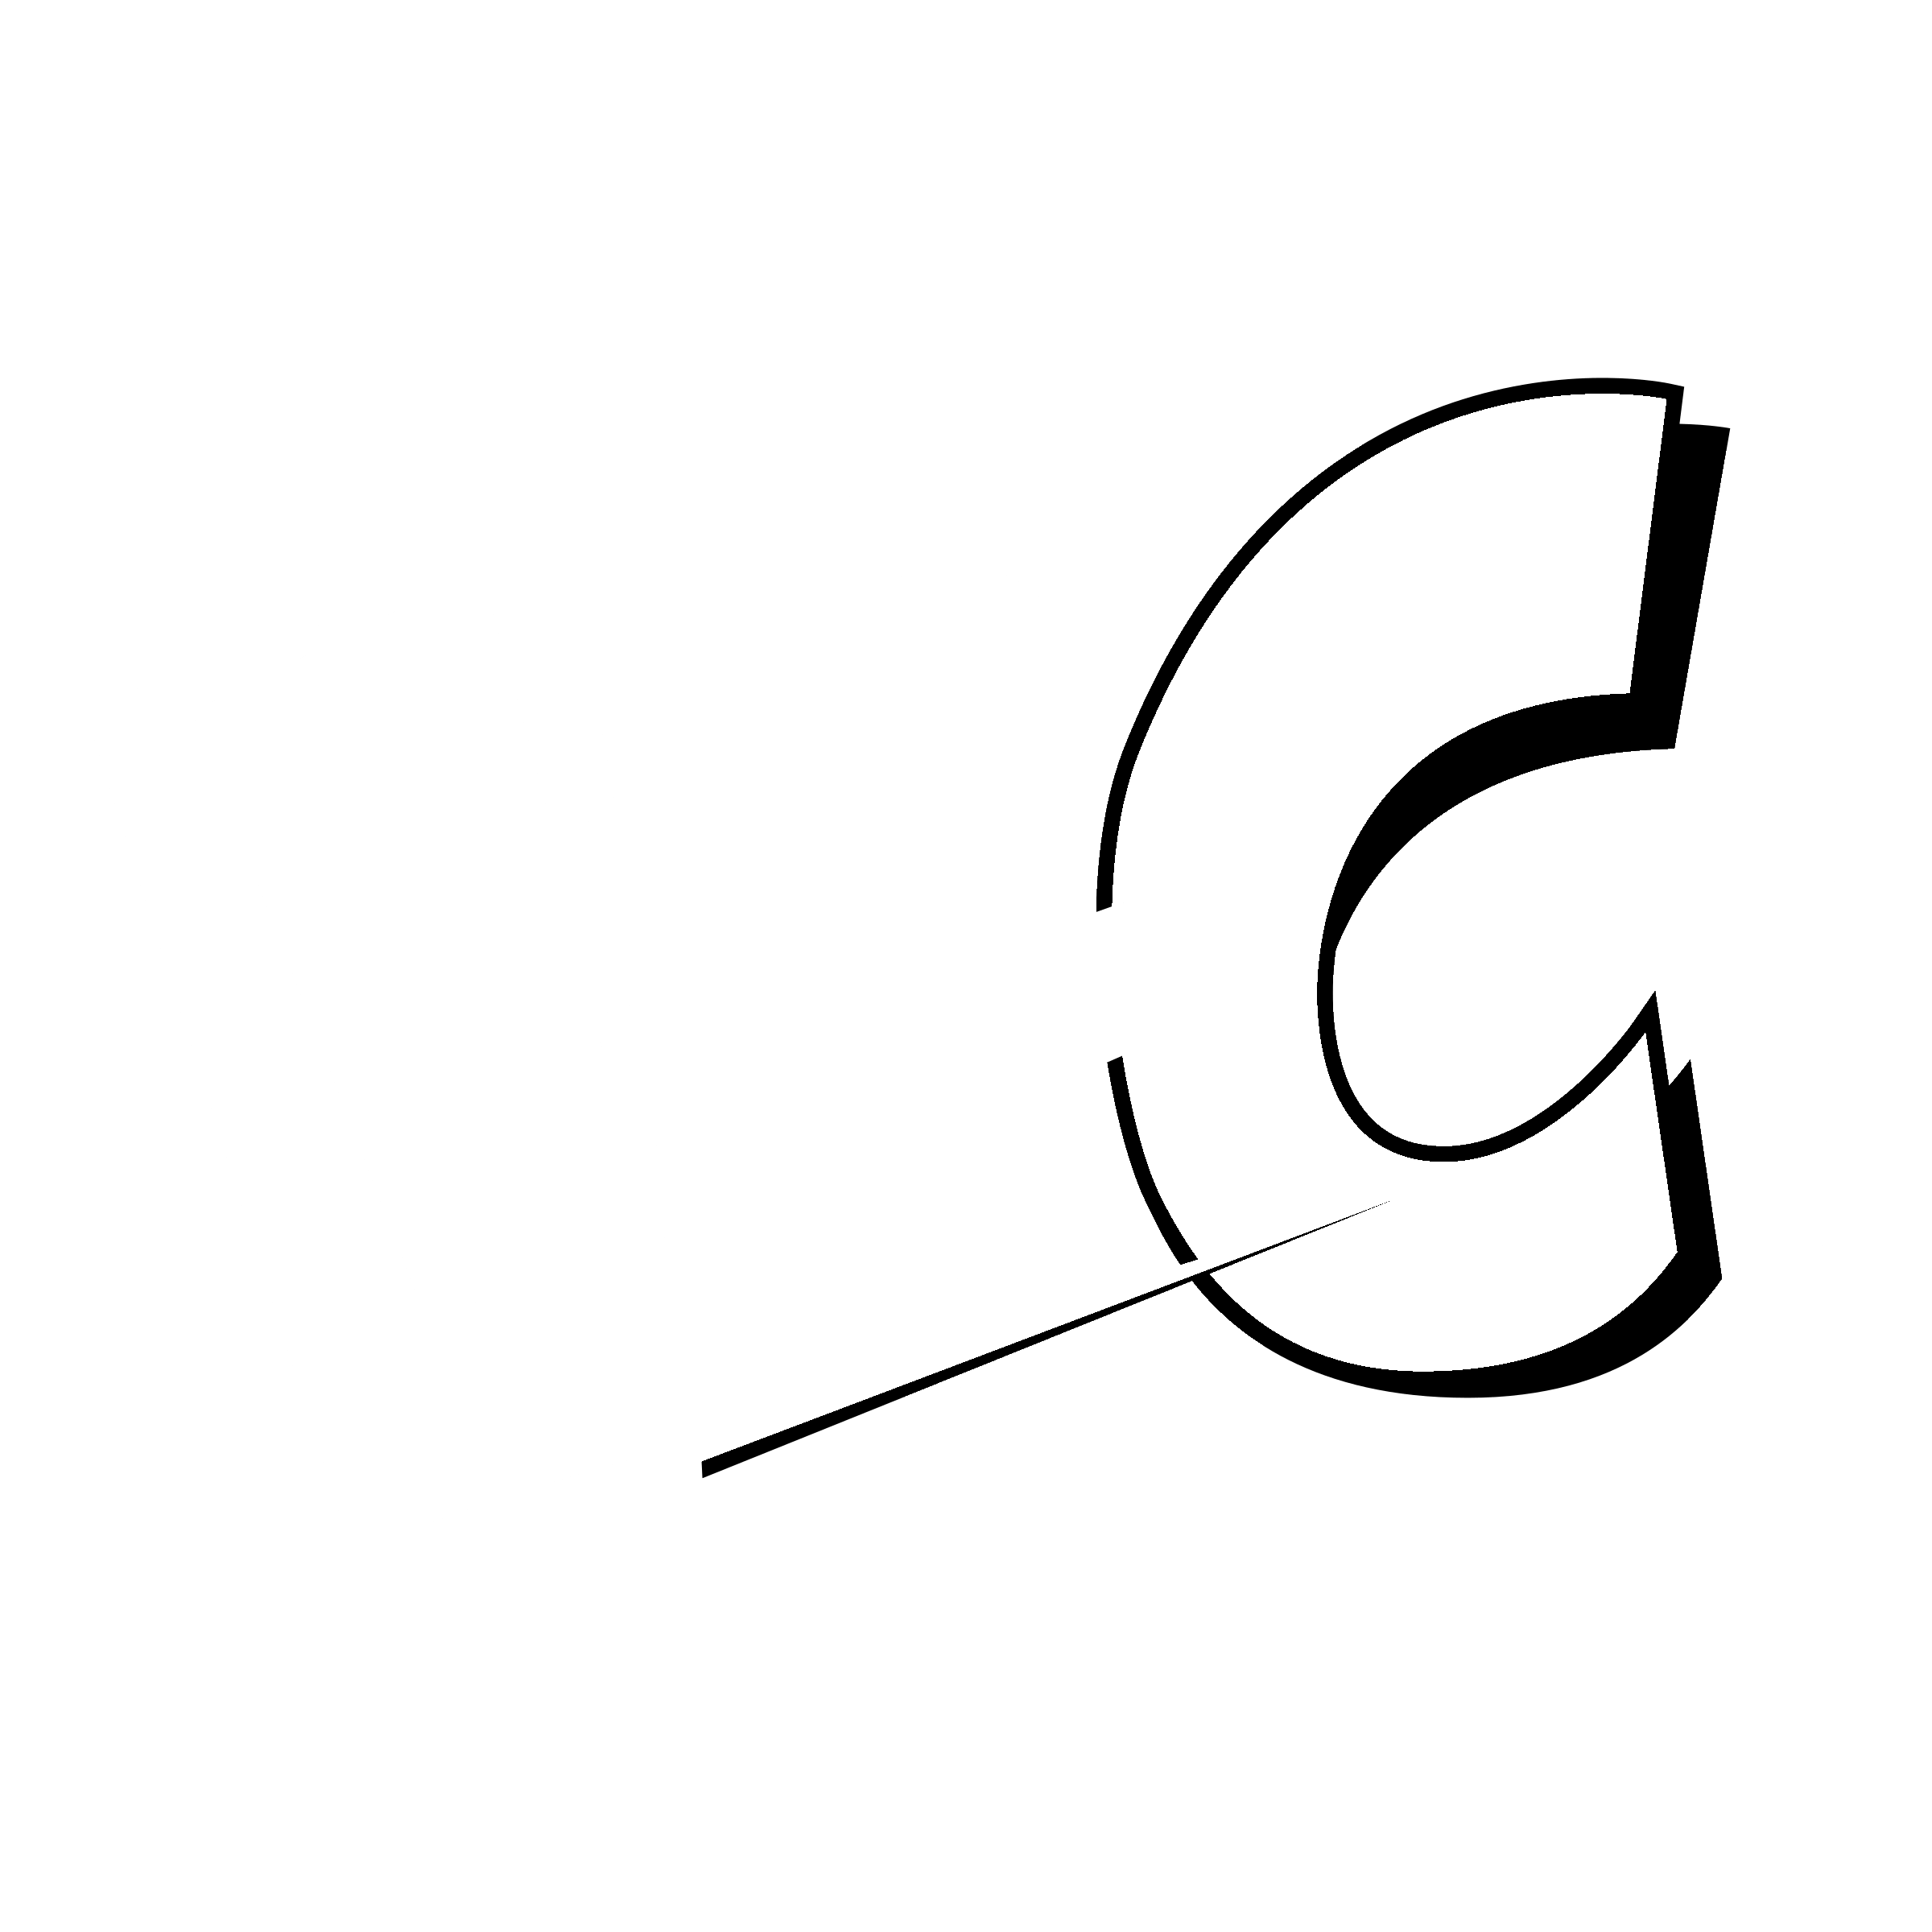 Hi-C Logo - Hi C Logo PNG Transparent & SVG Vector - Freebie Supply